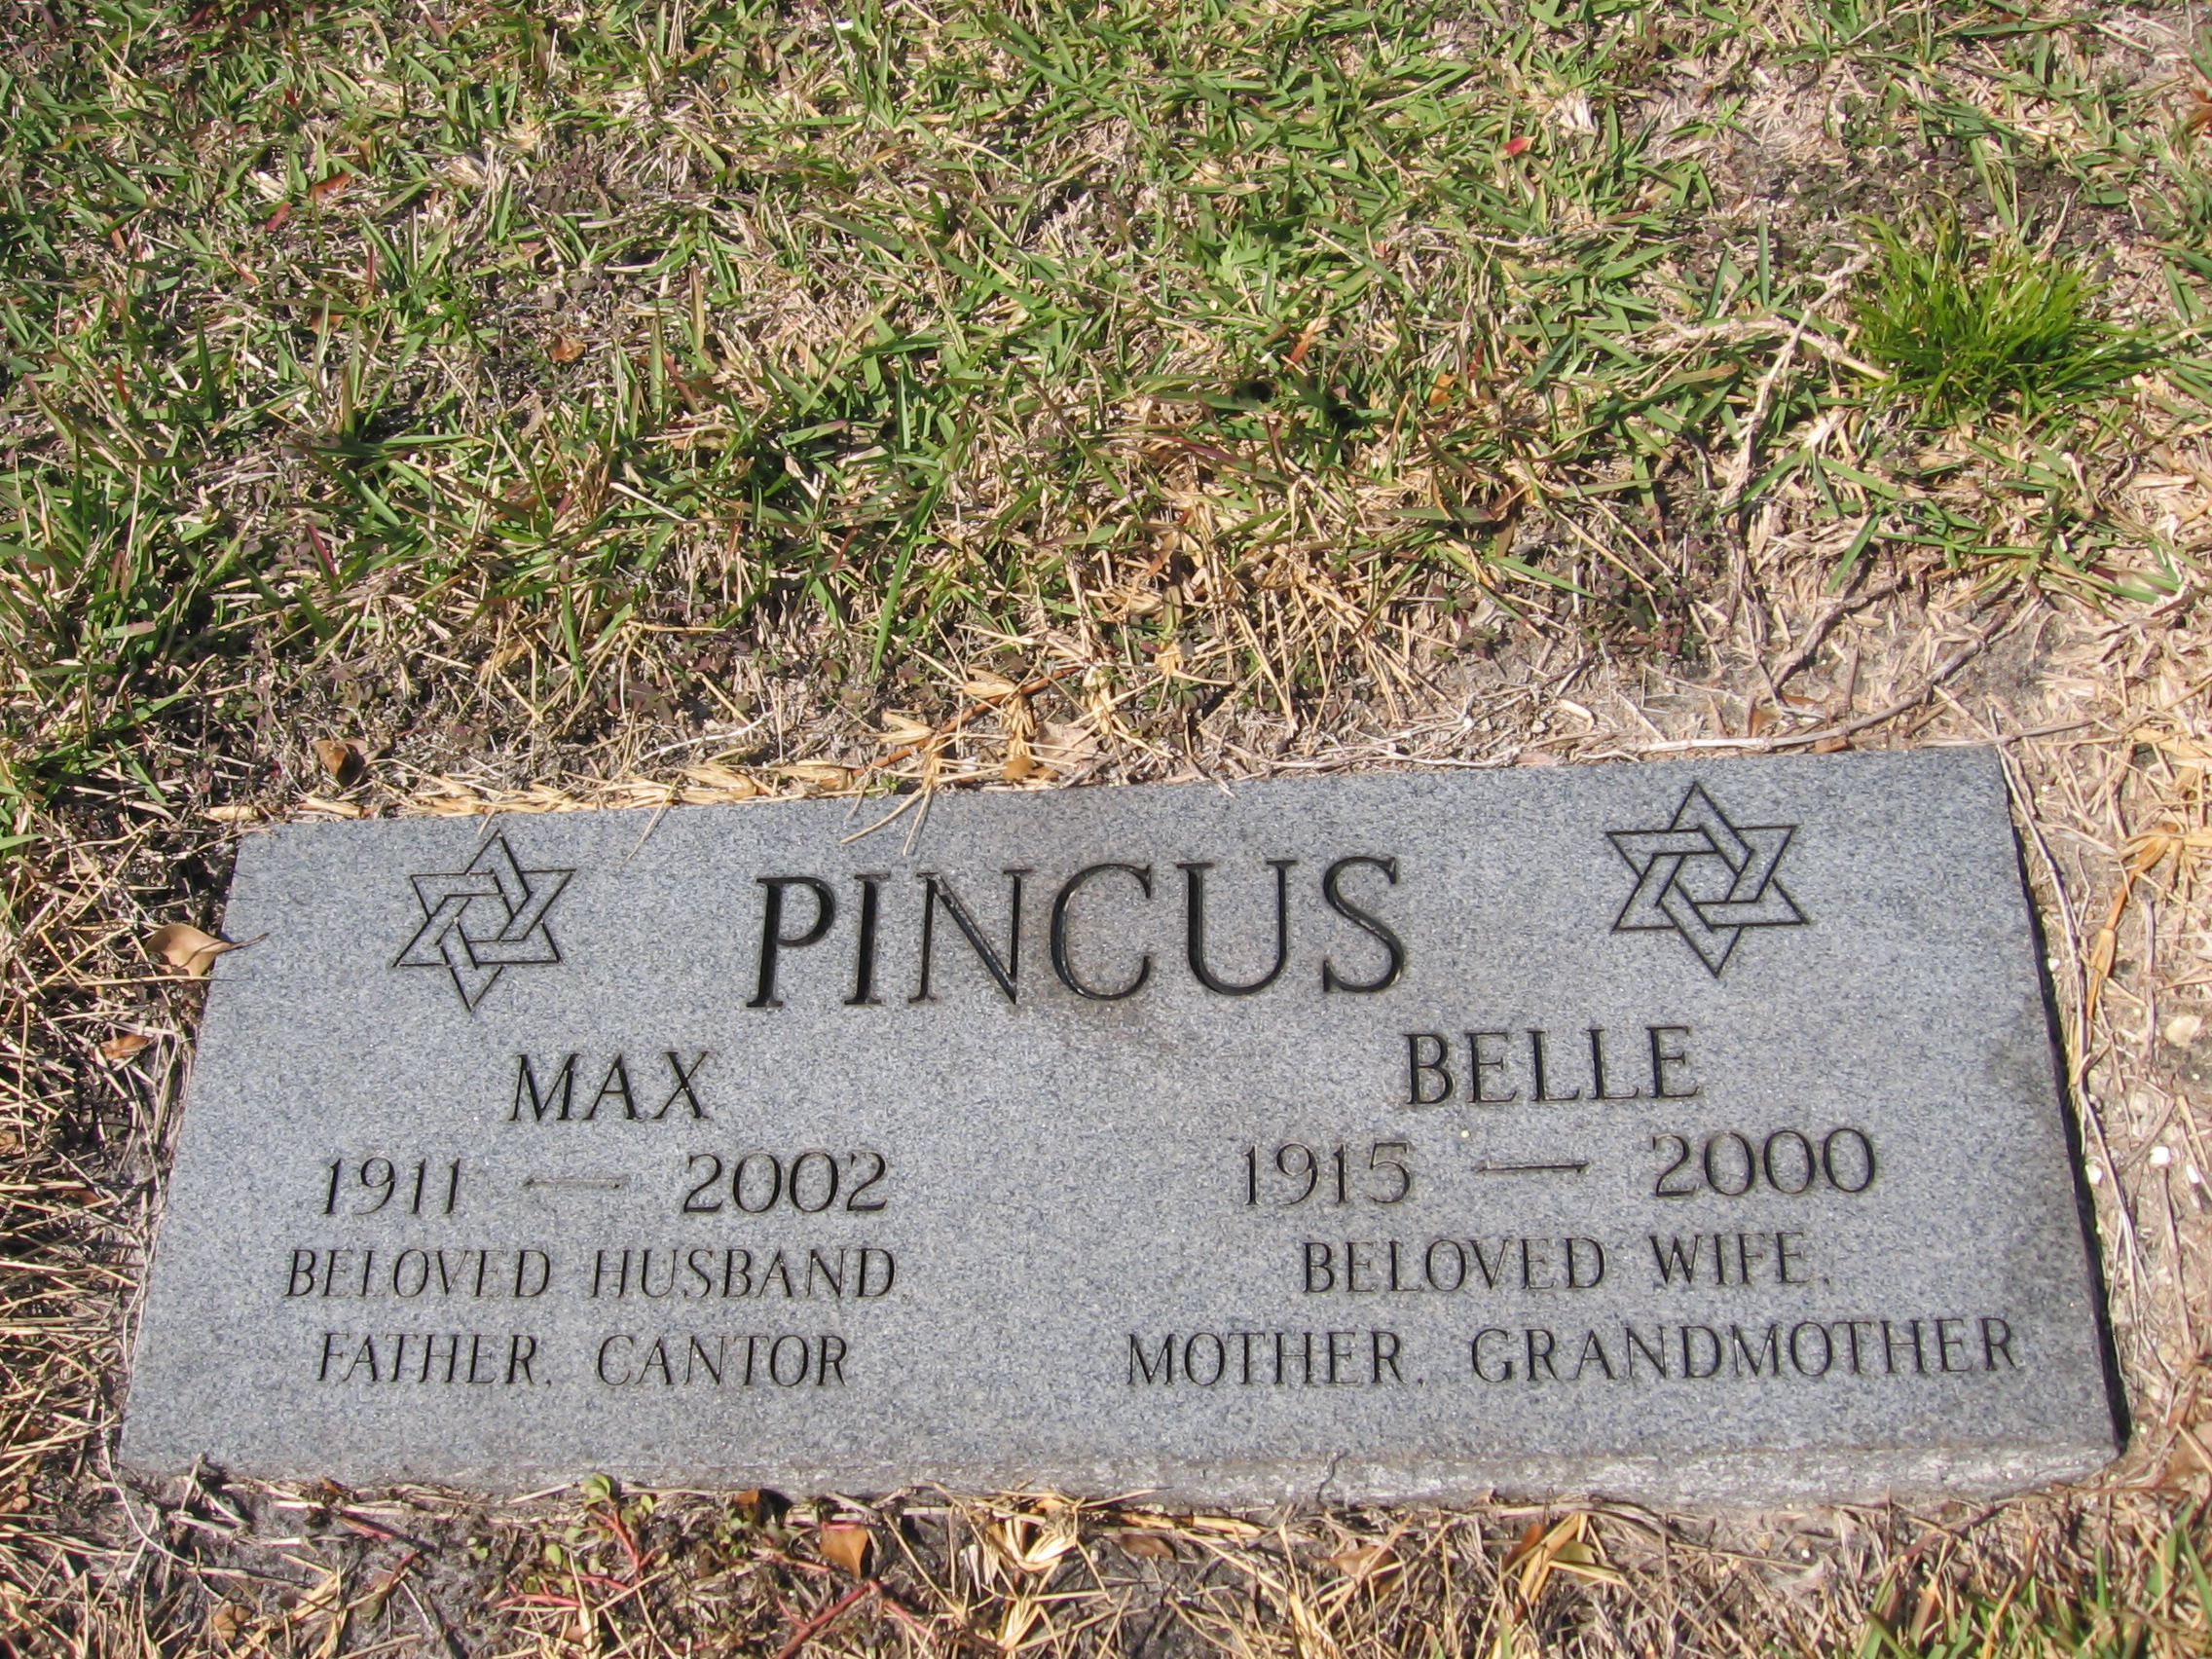 Max Pincus